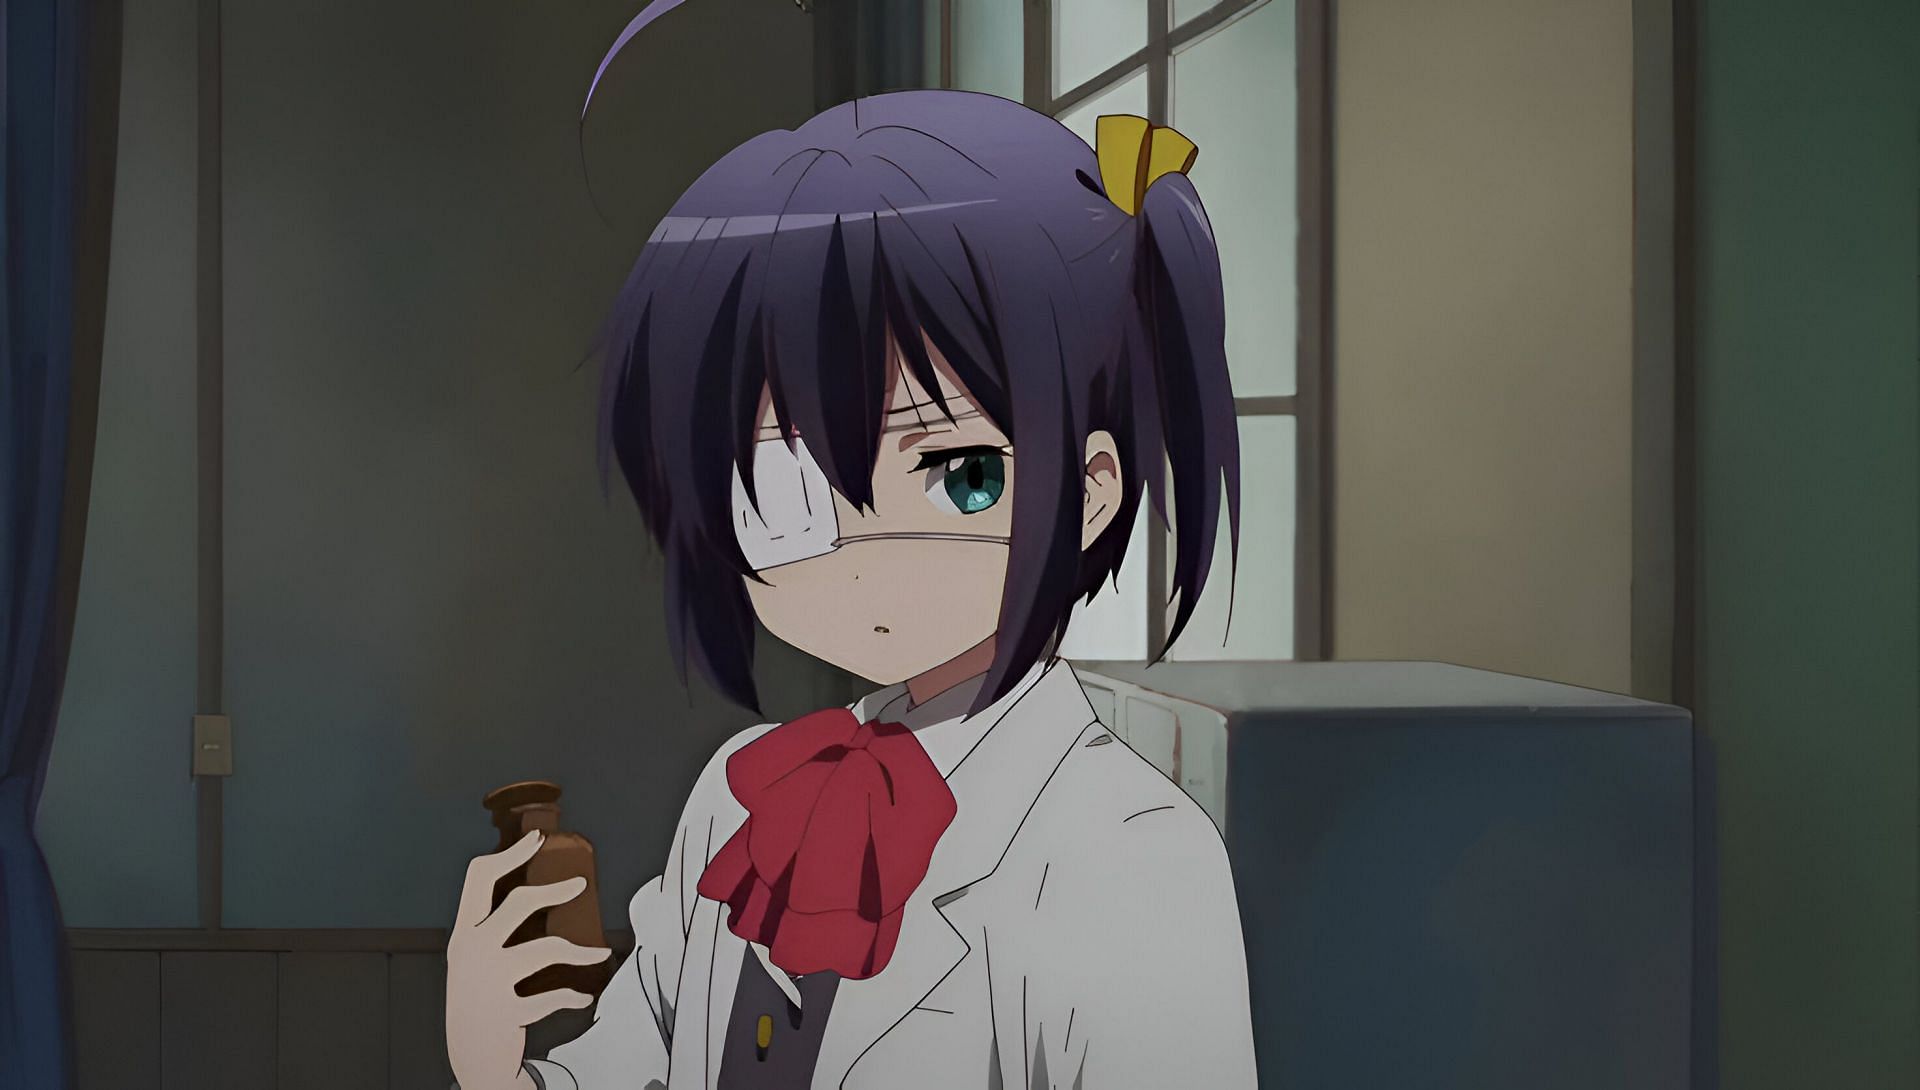 Rikka as seen in the anime (Image via KyoAni)